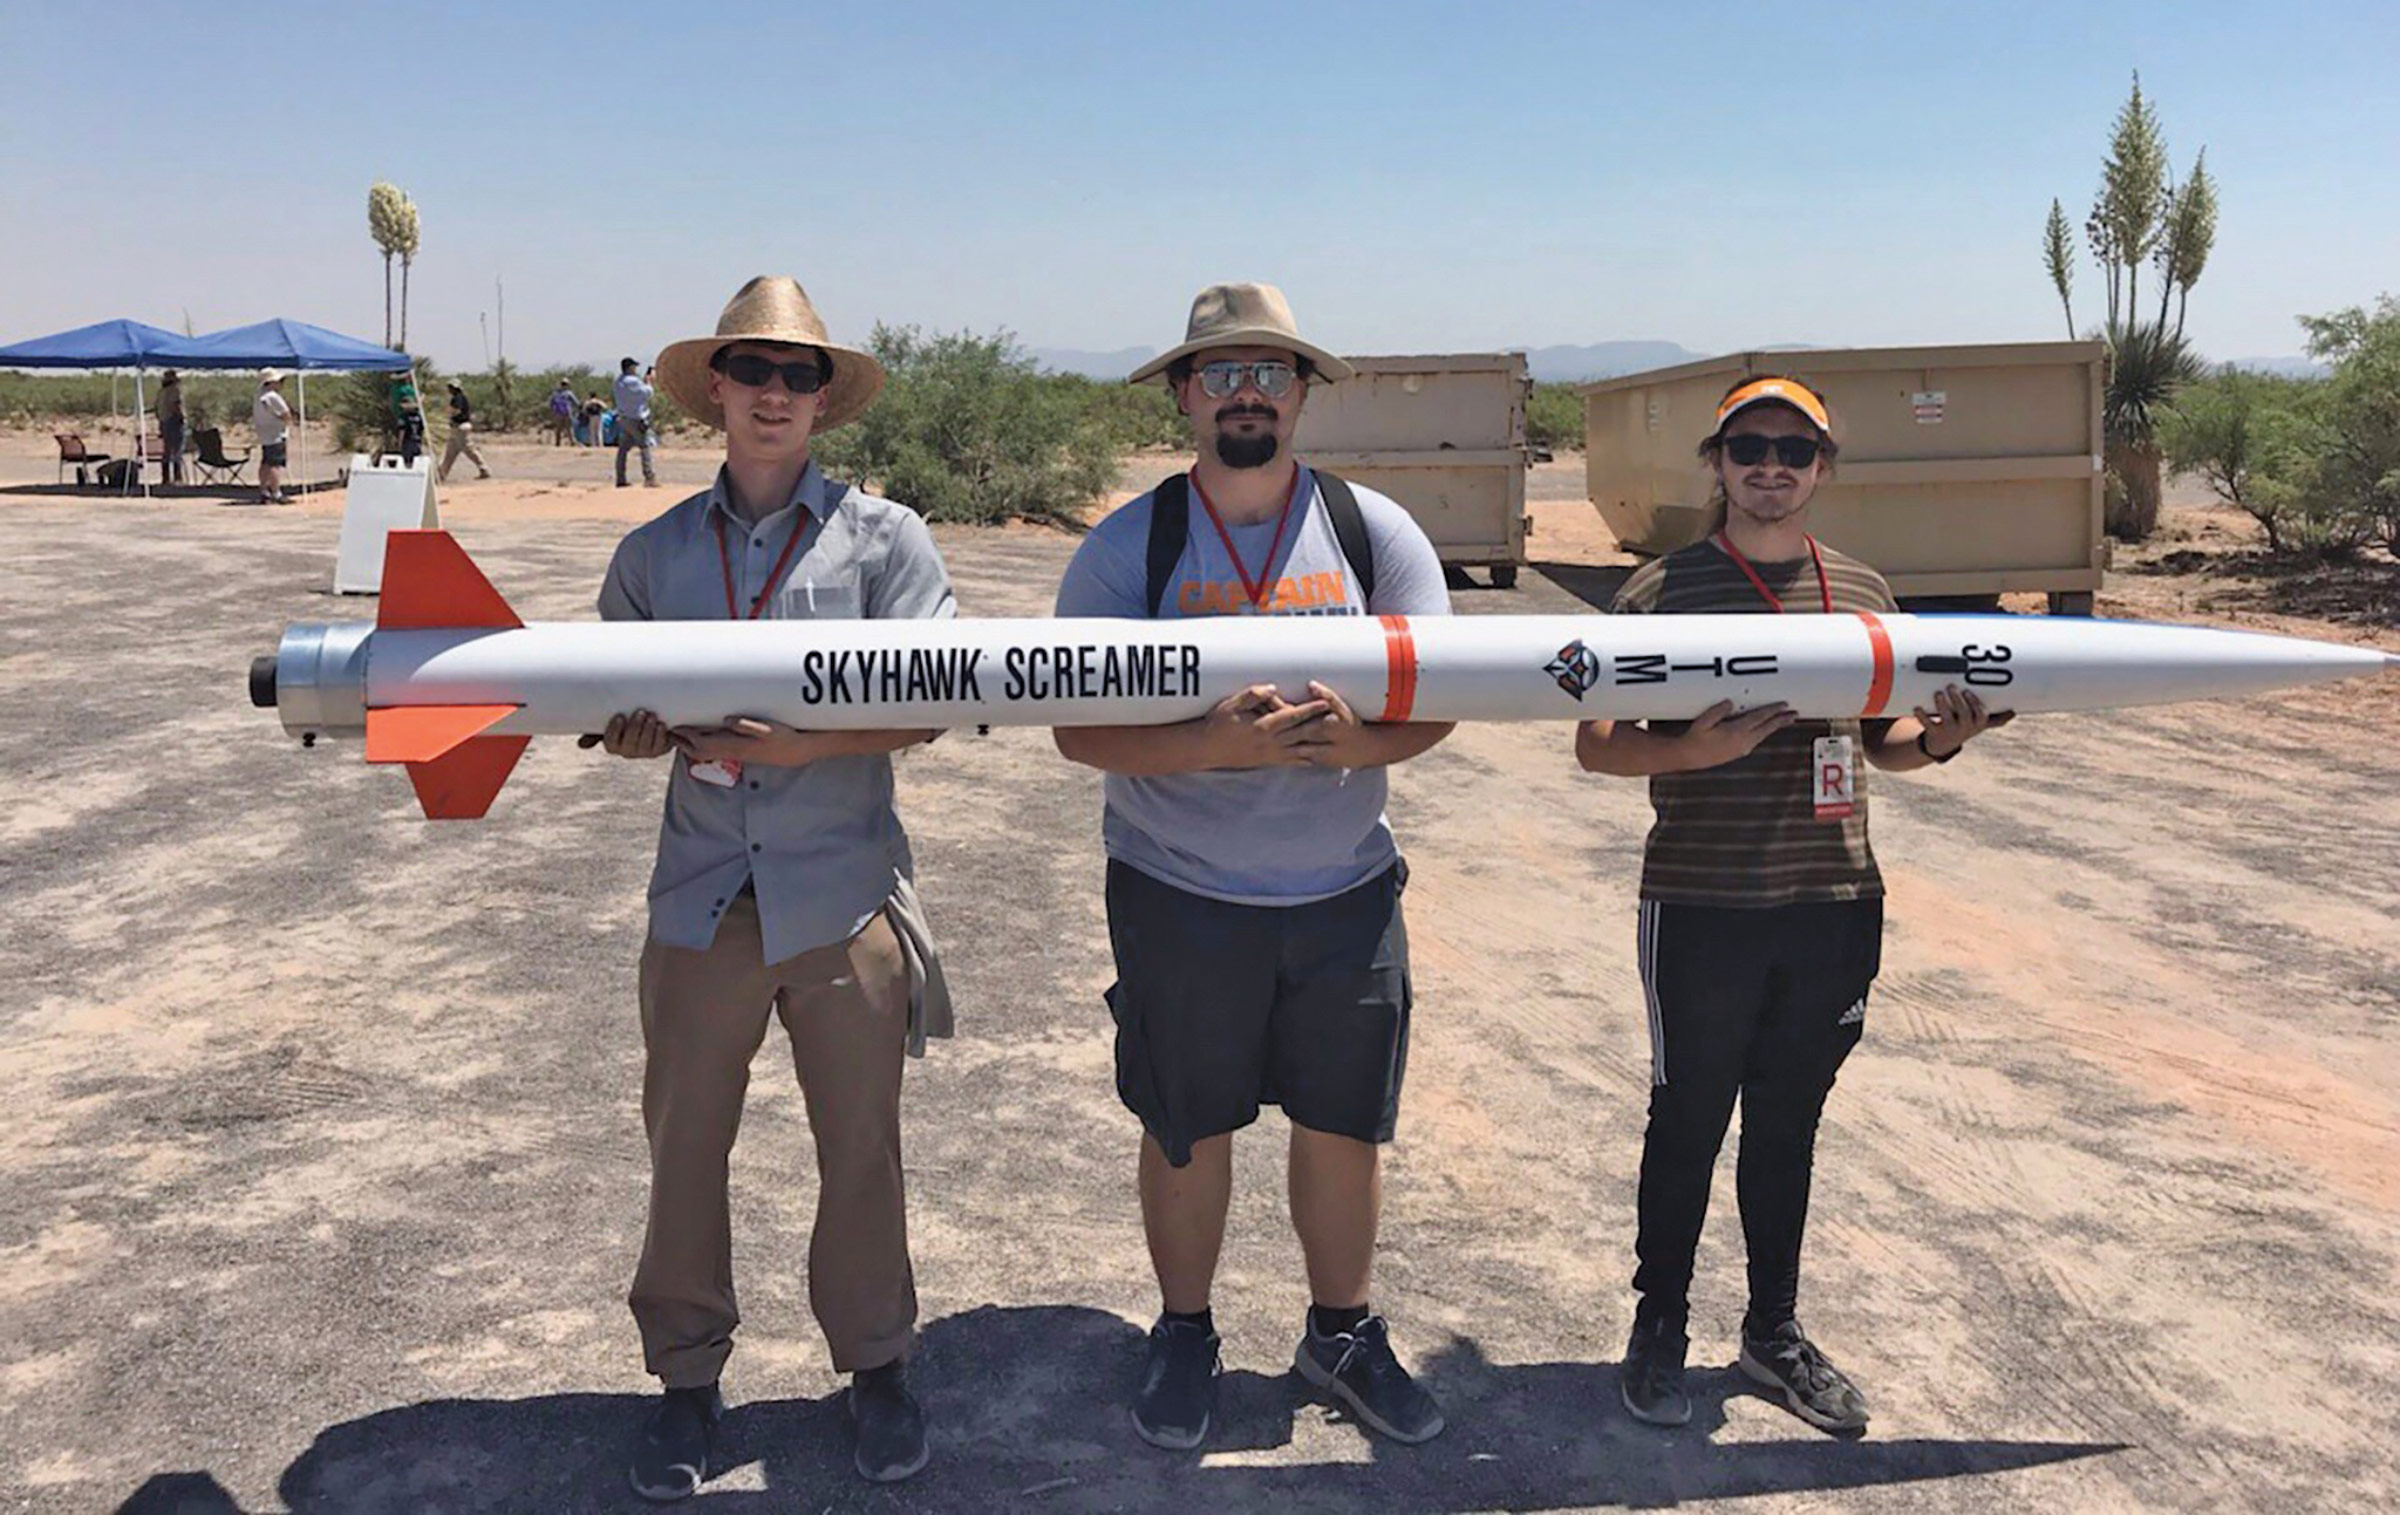 UT Martin's rocket team pictured with an 8 foot rocket called "Skyhawk Screamer"